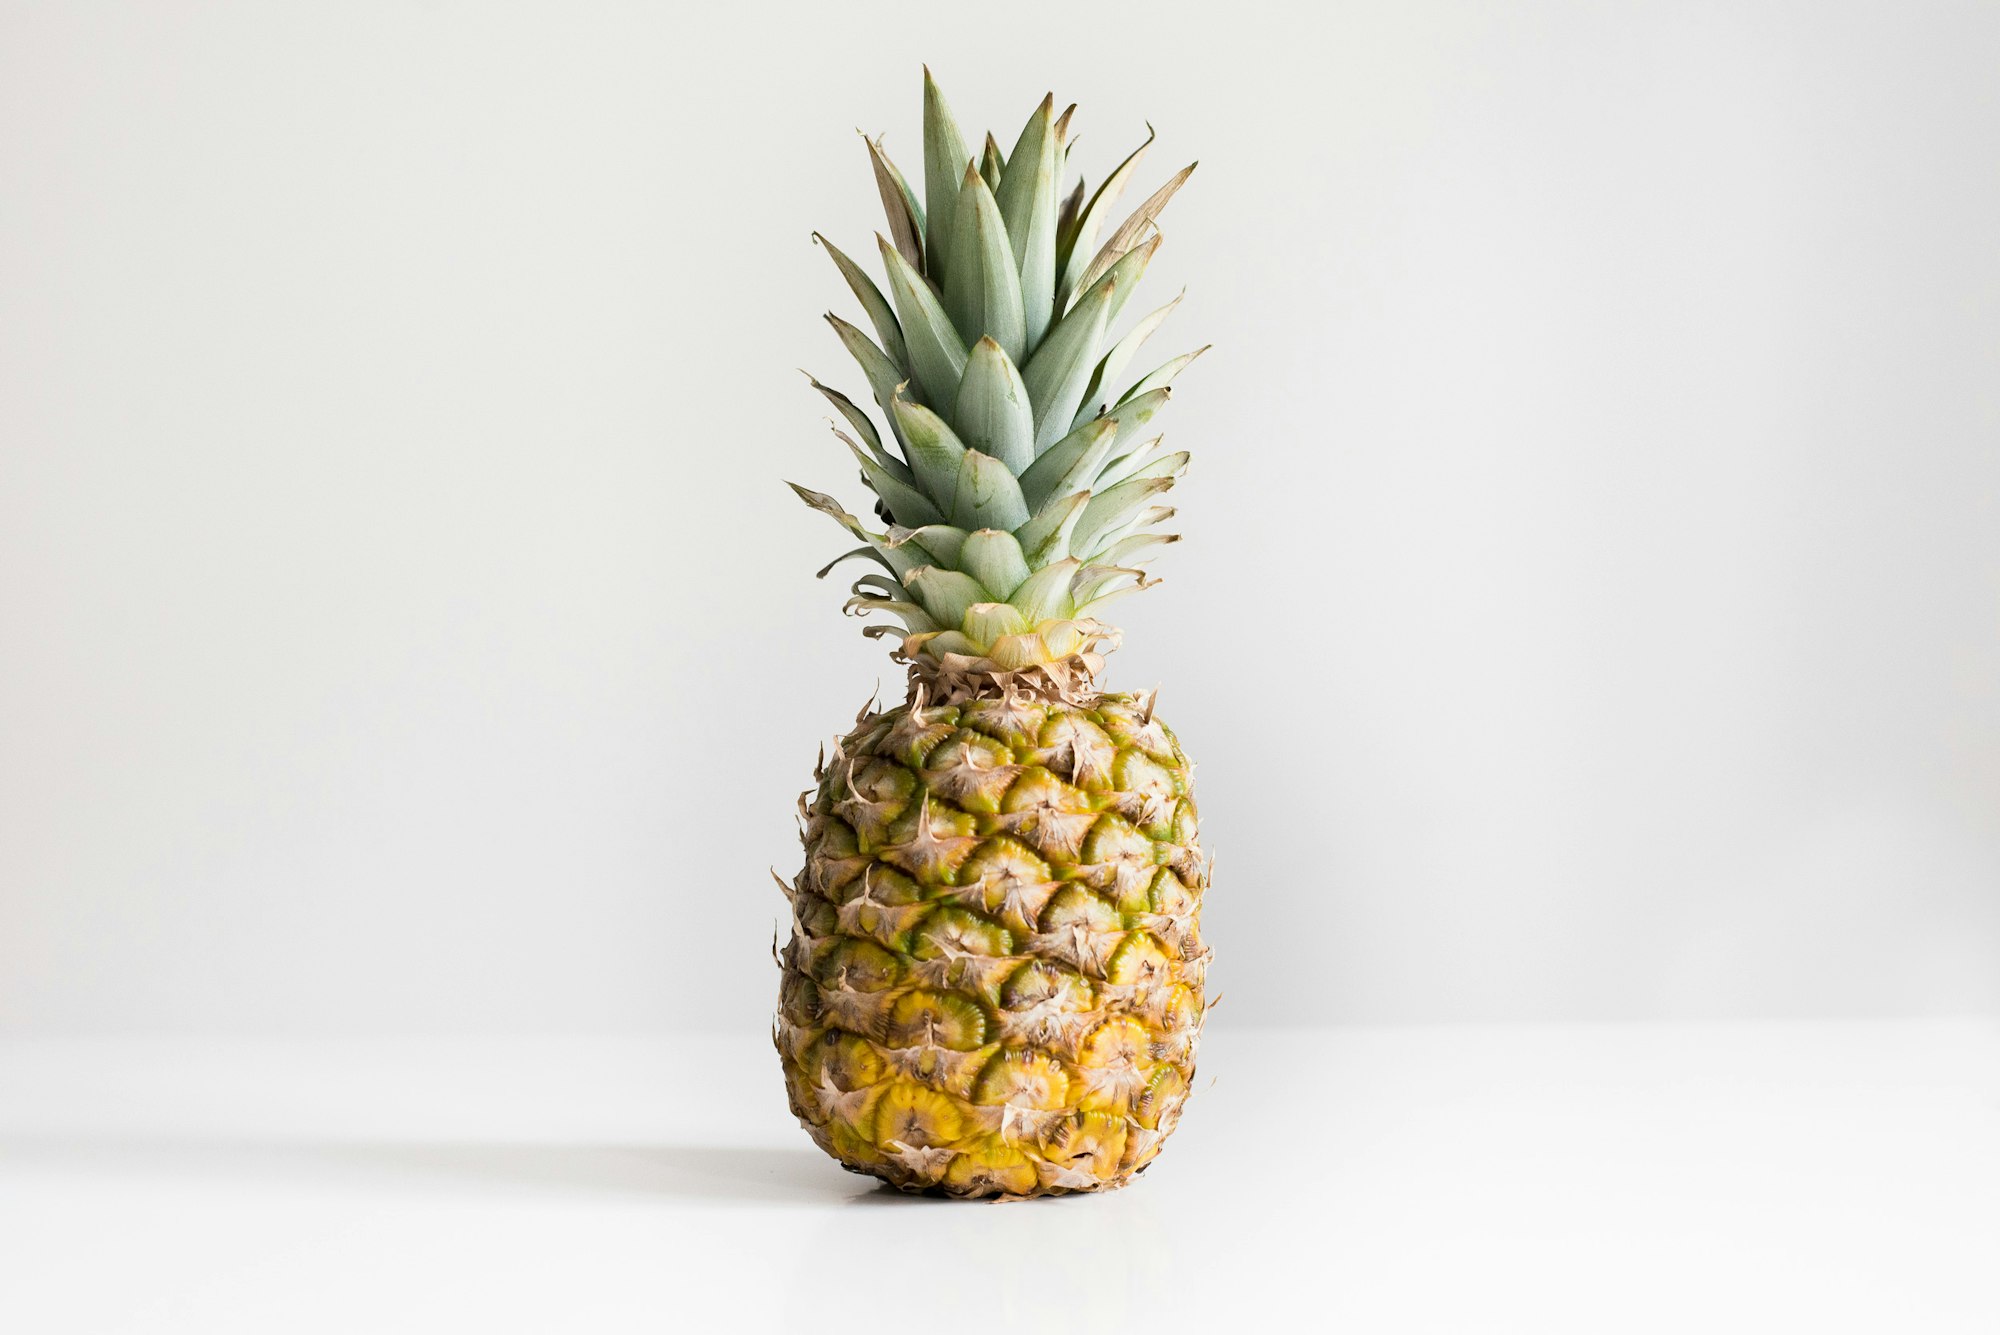 Where Did Pineapples Originate?